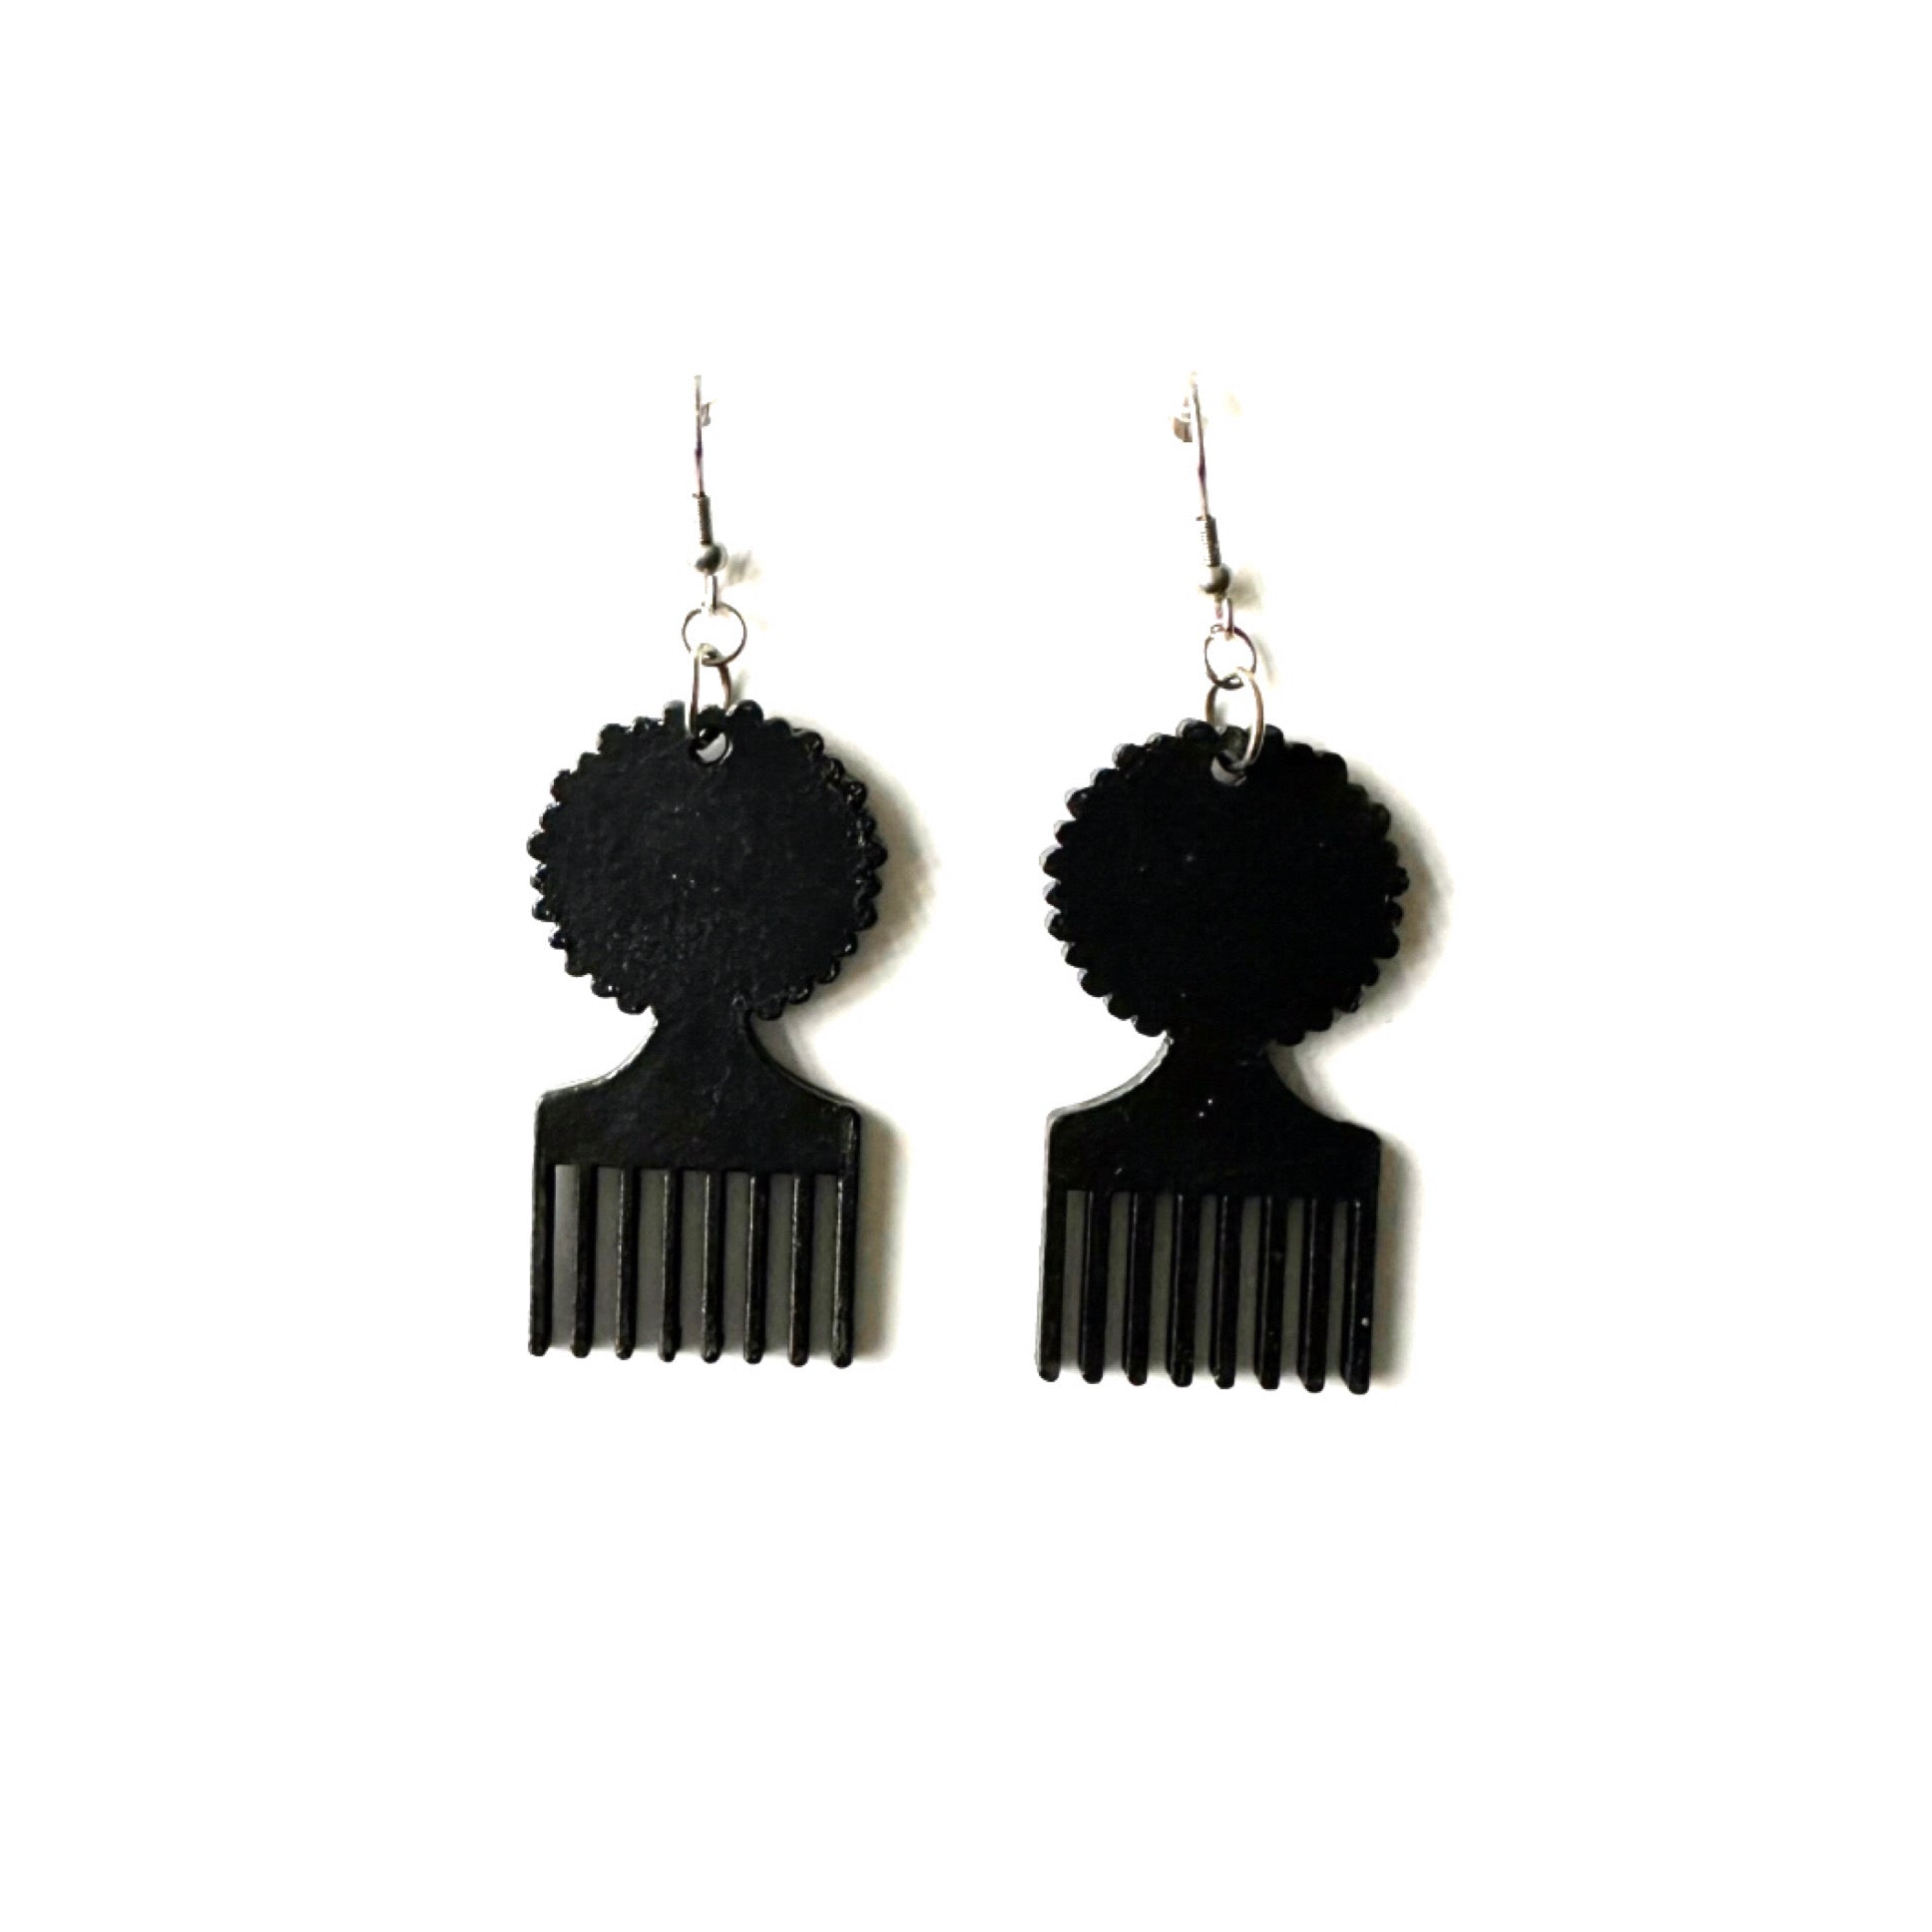 Afro Comb Wood Earrings - Black